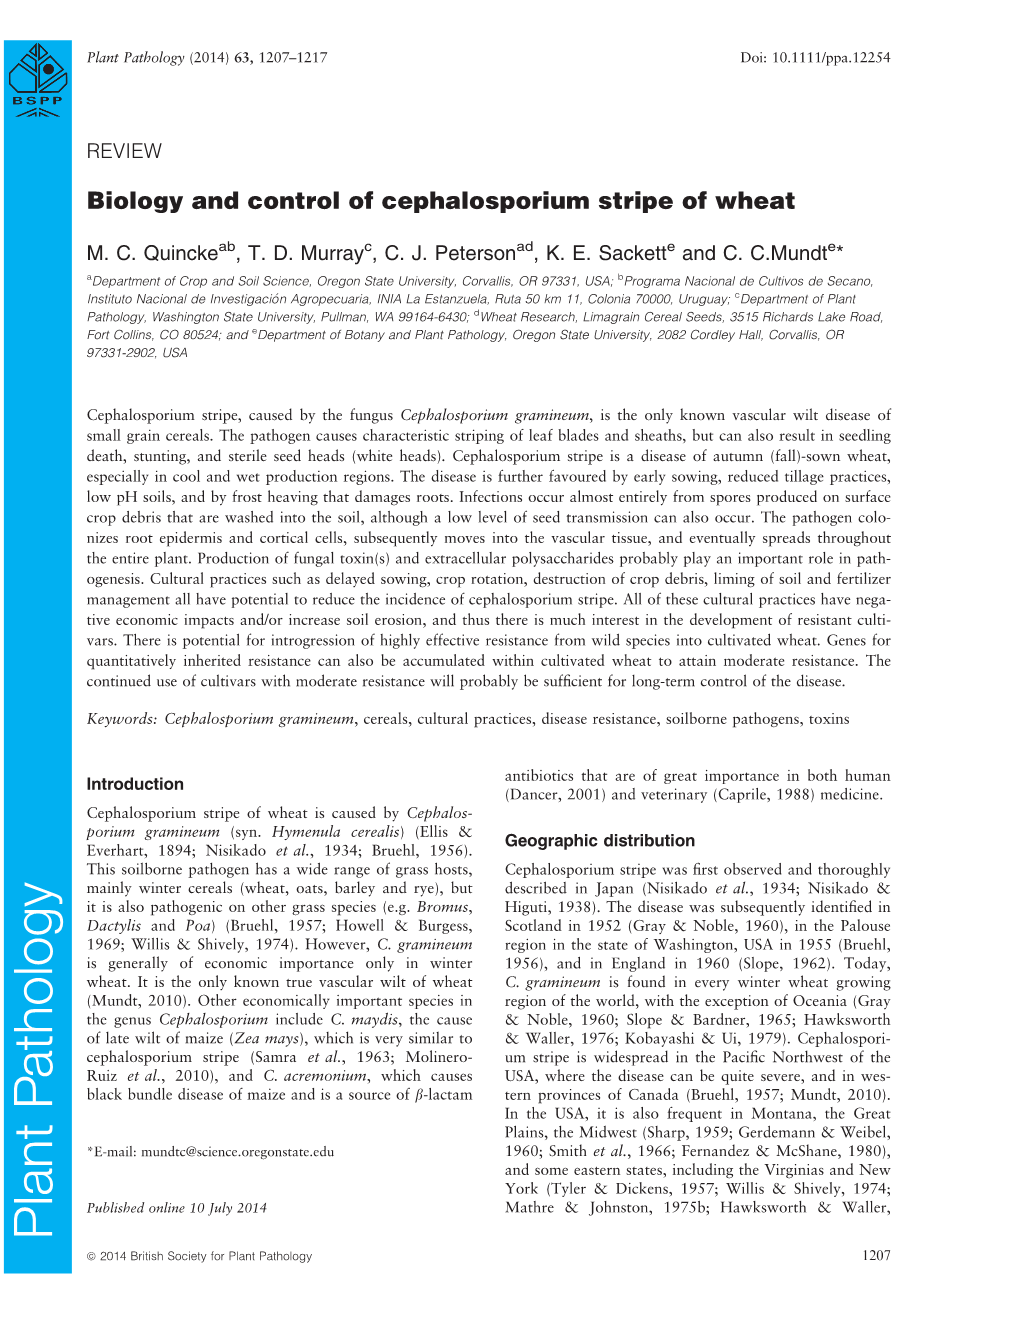 Biology and Control of Cephalosporium Stripe of Wheat (Pdf)